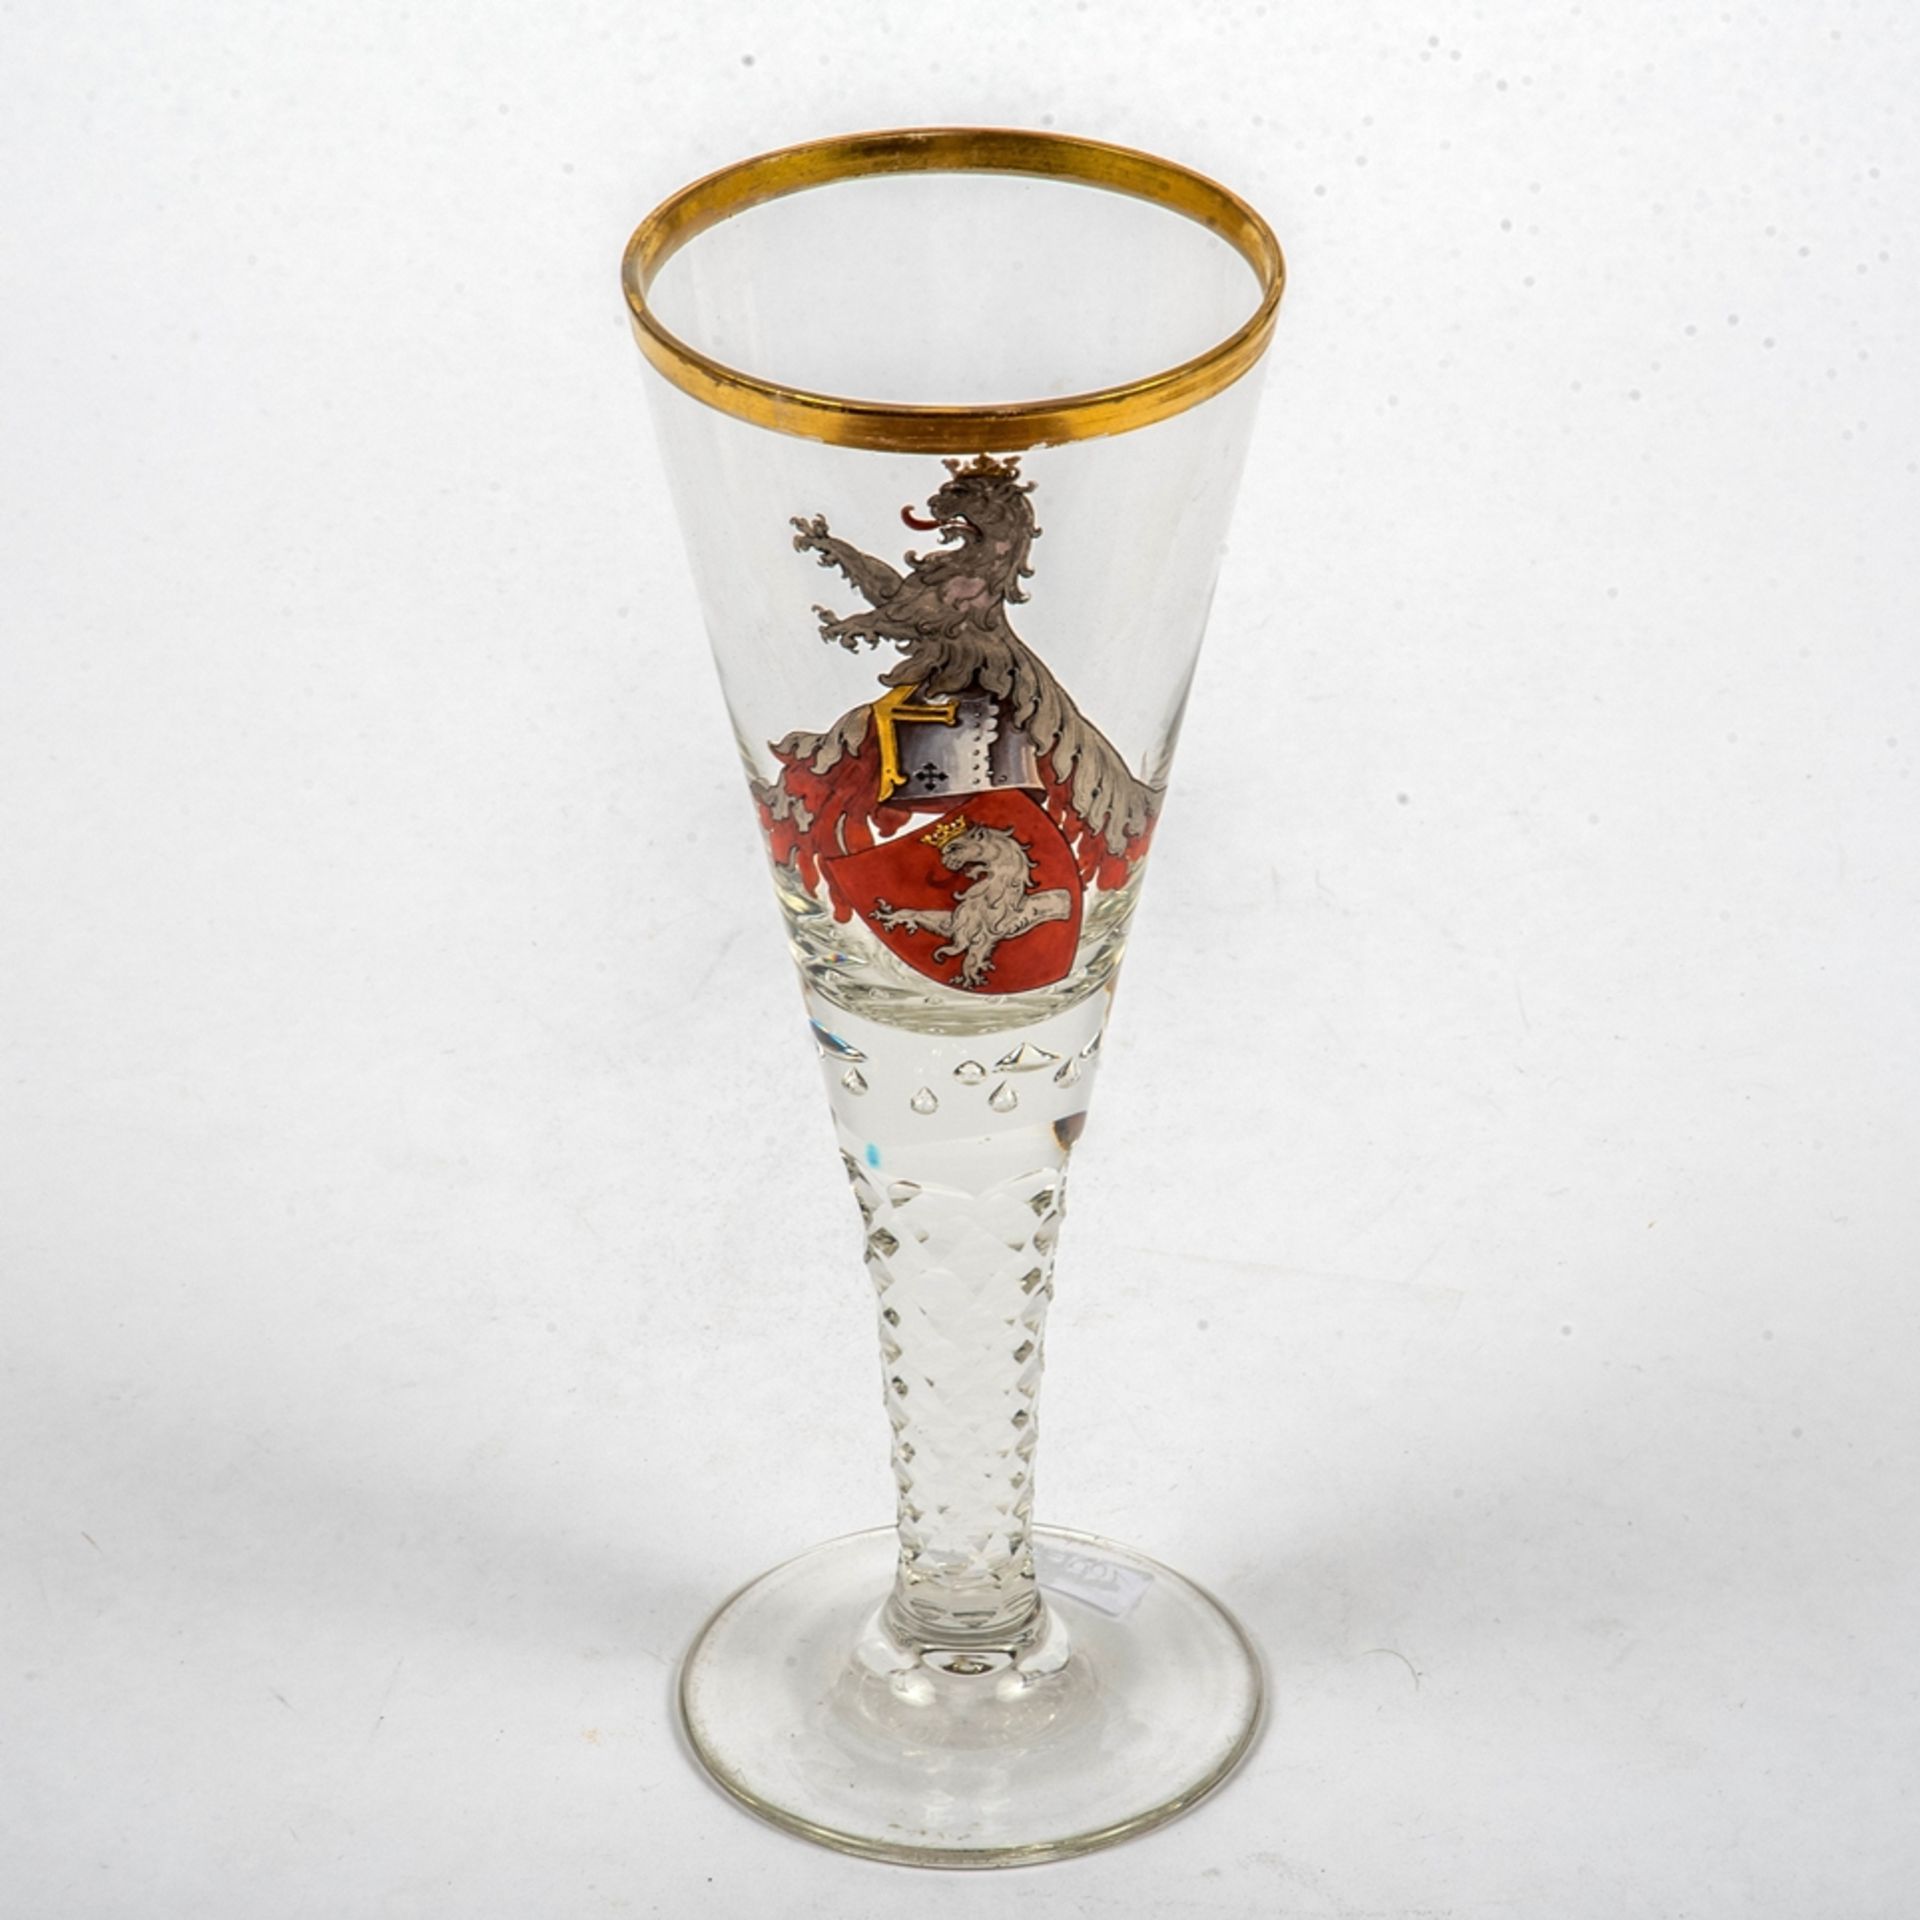 Pokalglas mit Wappen - Image 2 of 2